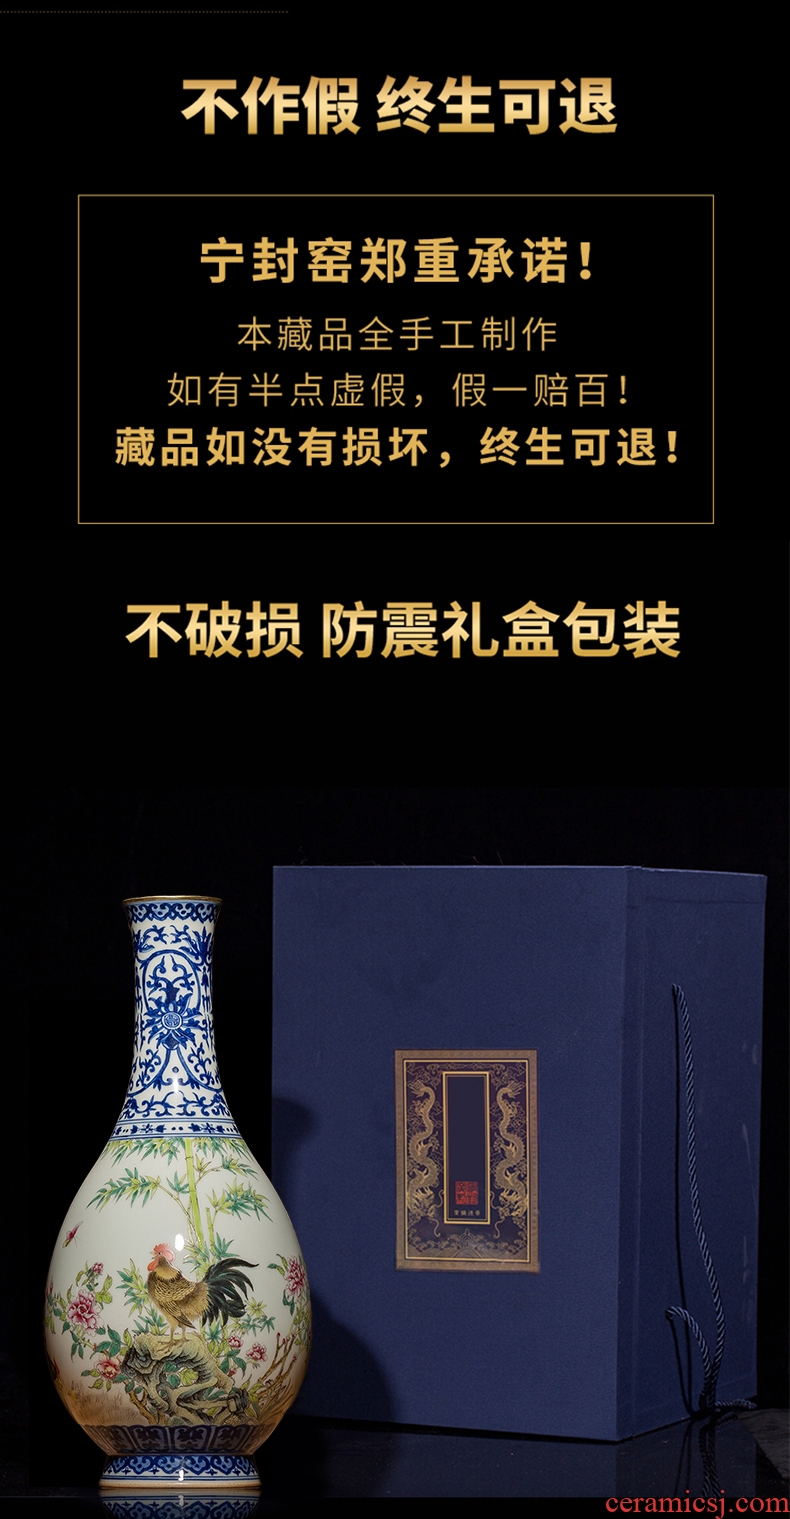 Better sealed kiln jingdezhen home furnishing articles Chinese blue and white porcelain vase water bottle art antique vase household decoration